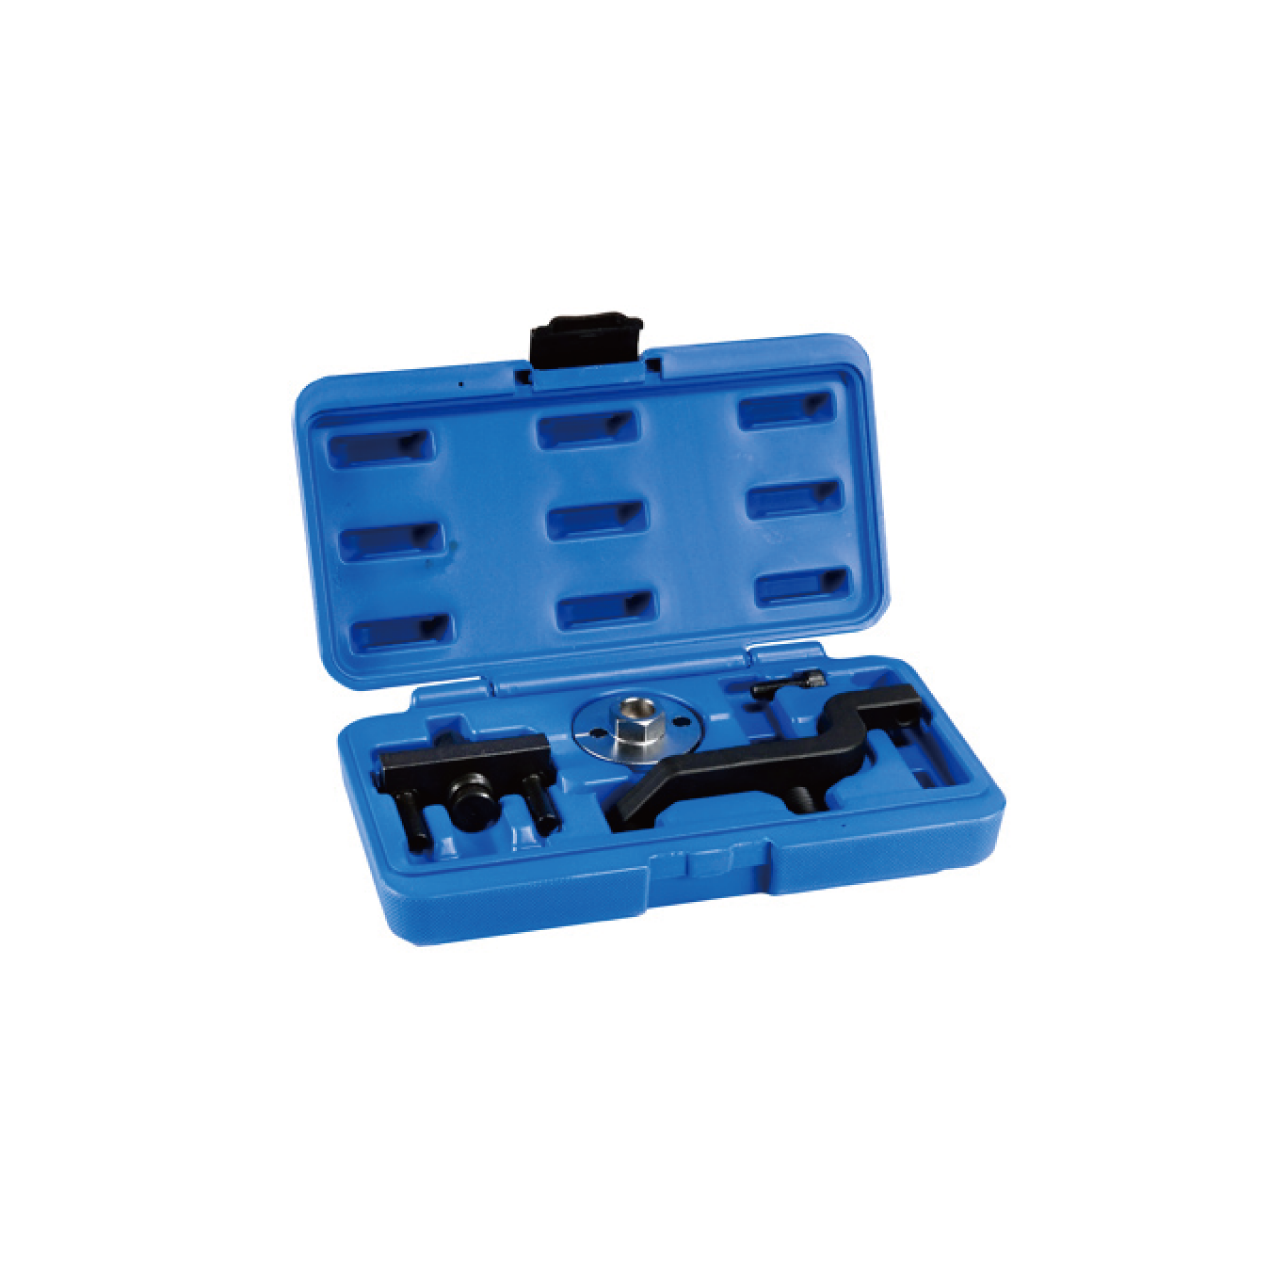  3pcs Water Pump Tool Kit